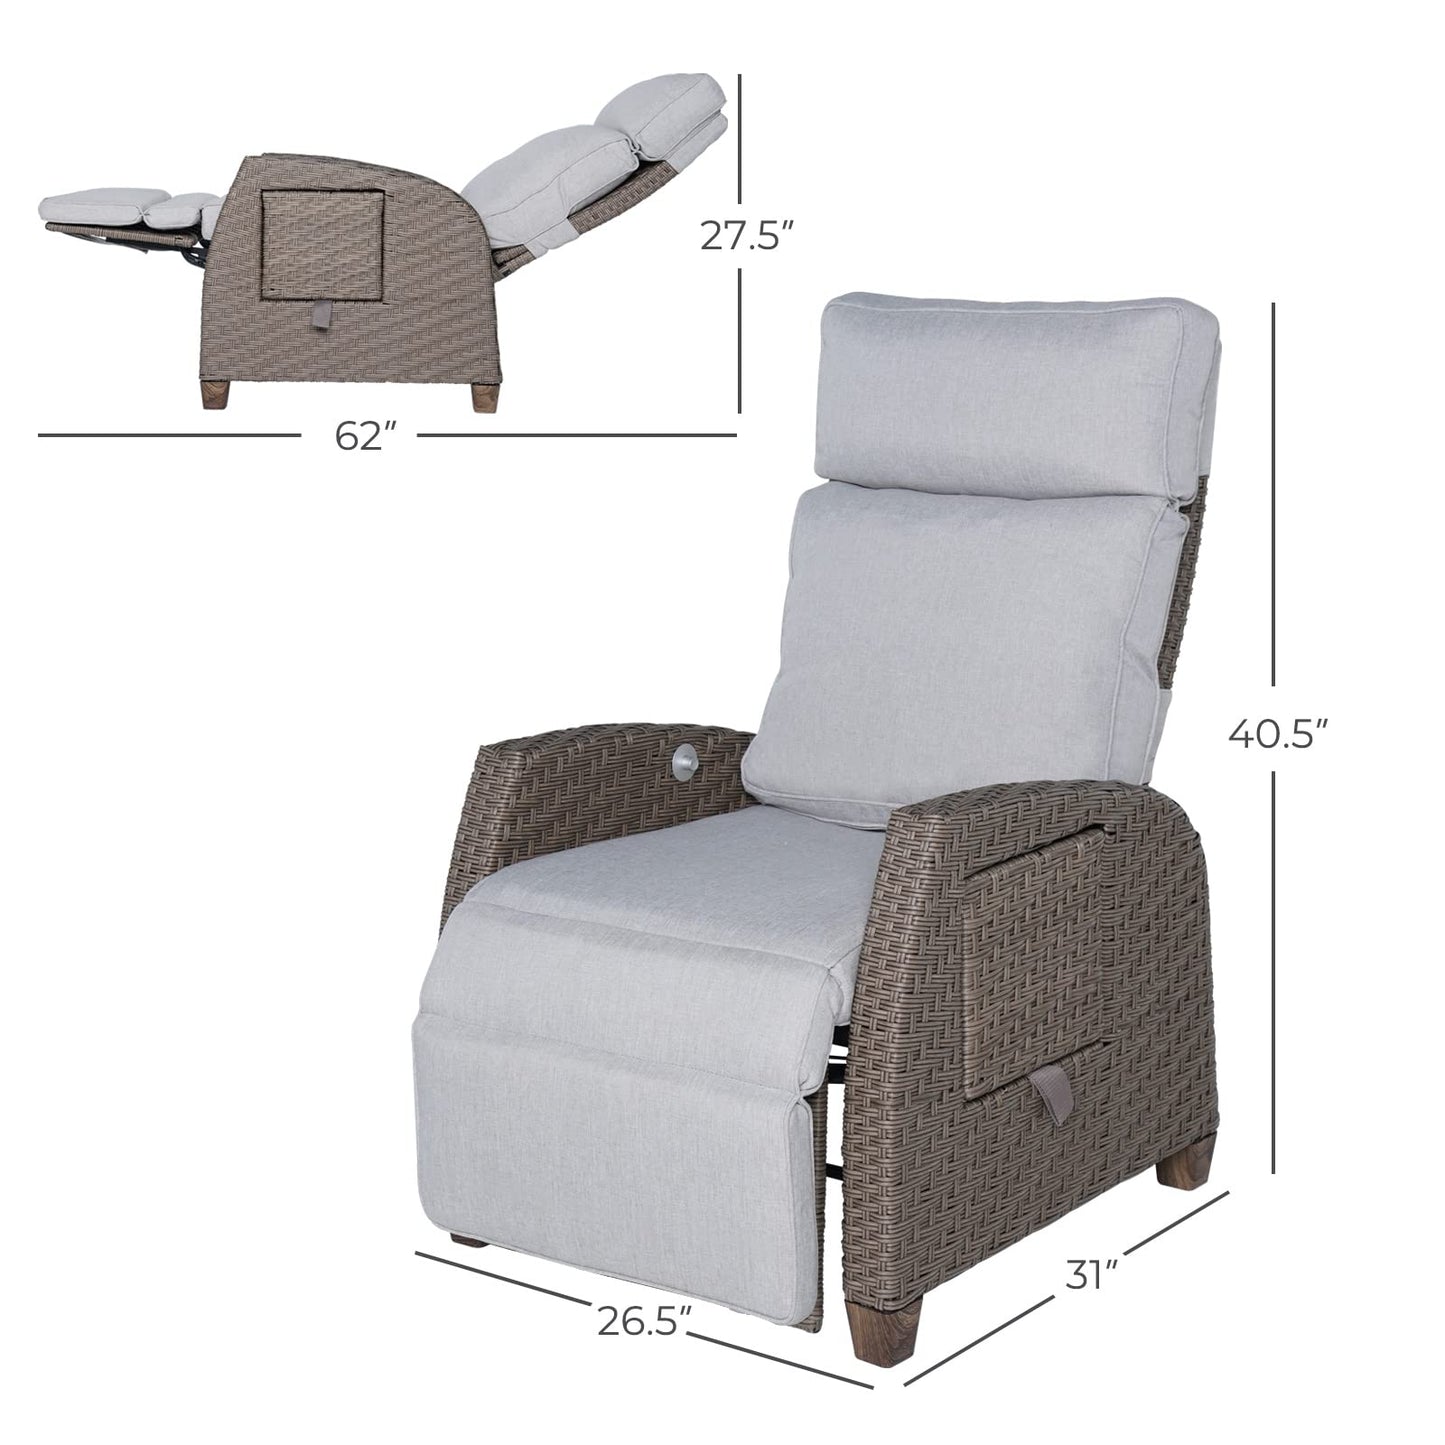 Grand patio Indoor & Outdoor Recliner Chair PE Wicker Patio Recliner with Flip Table Reclining Lounge Chair, Mist Grey